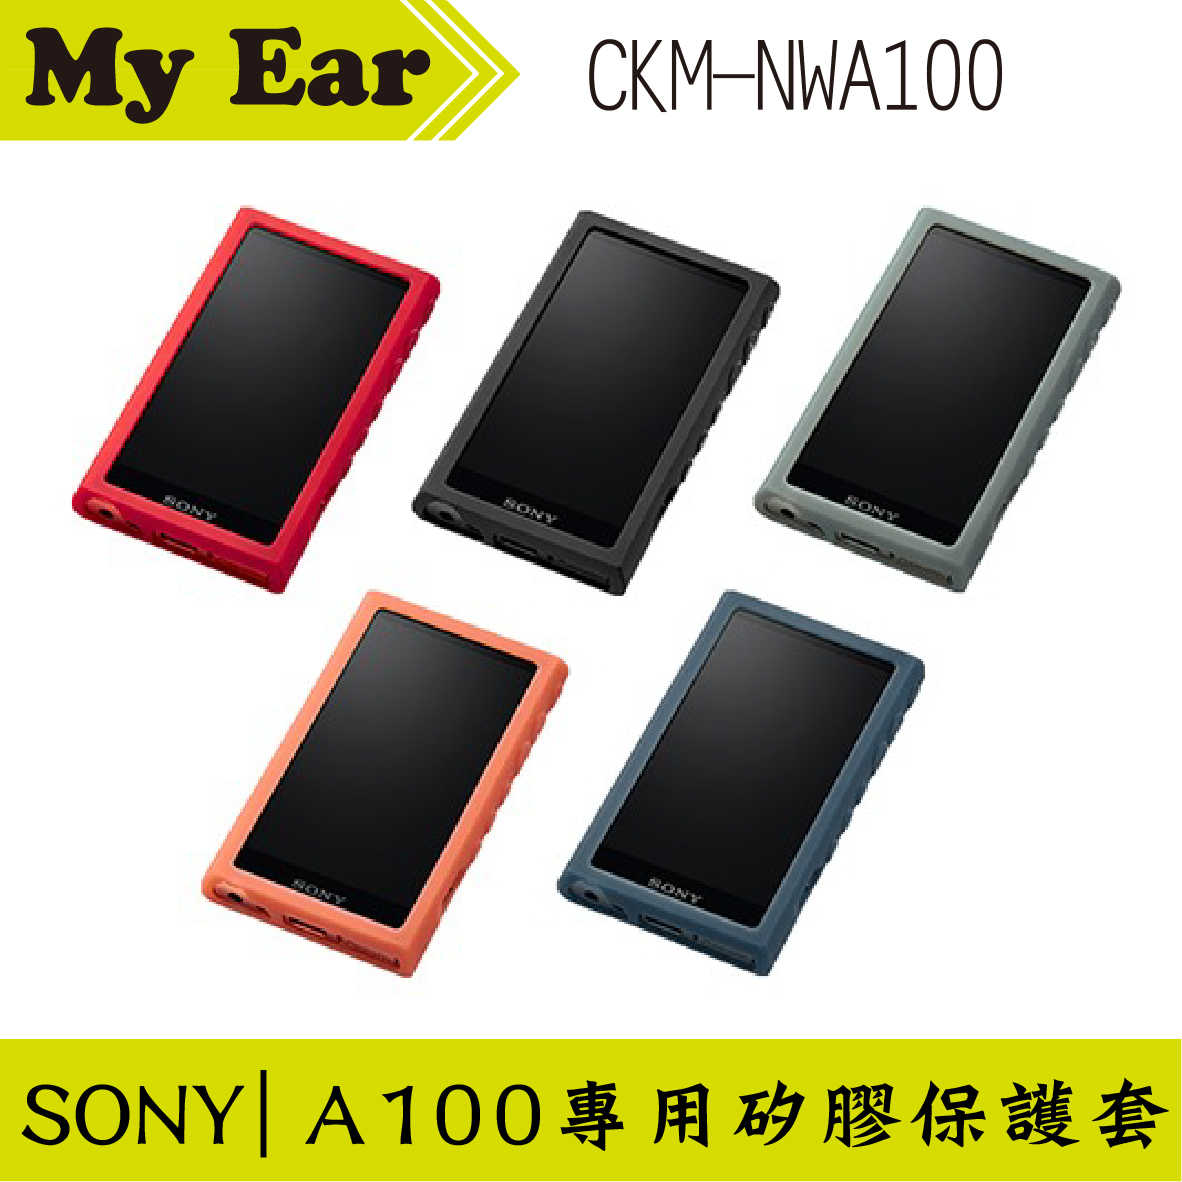 SONY 索尼 CKM-NWA100 藍色 Walkman® 專用矽膠保護殼 | My Ear 耳機專門店